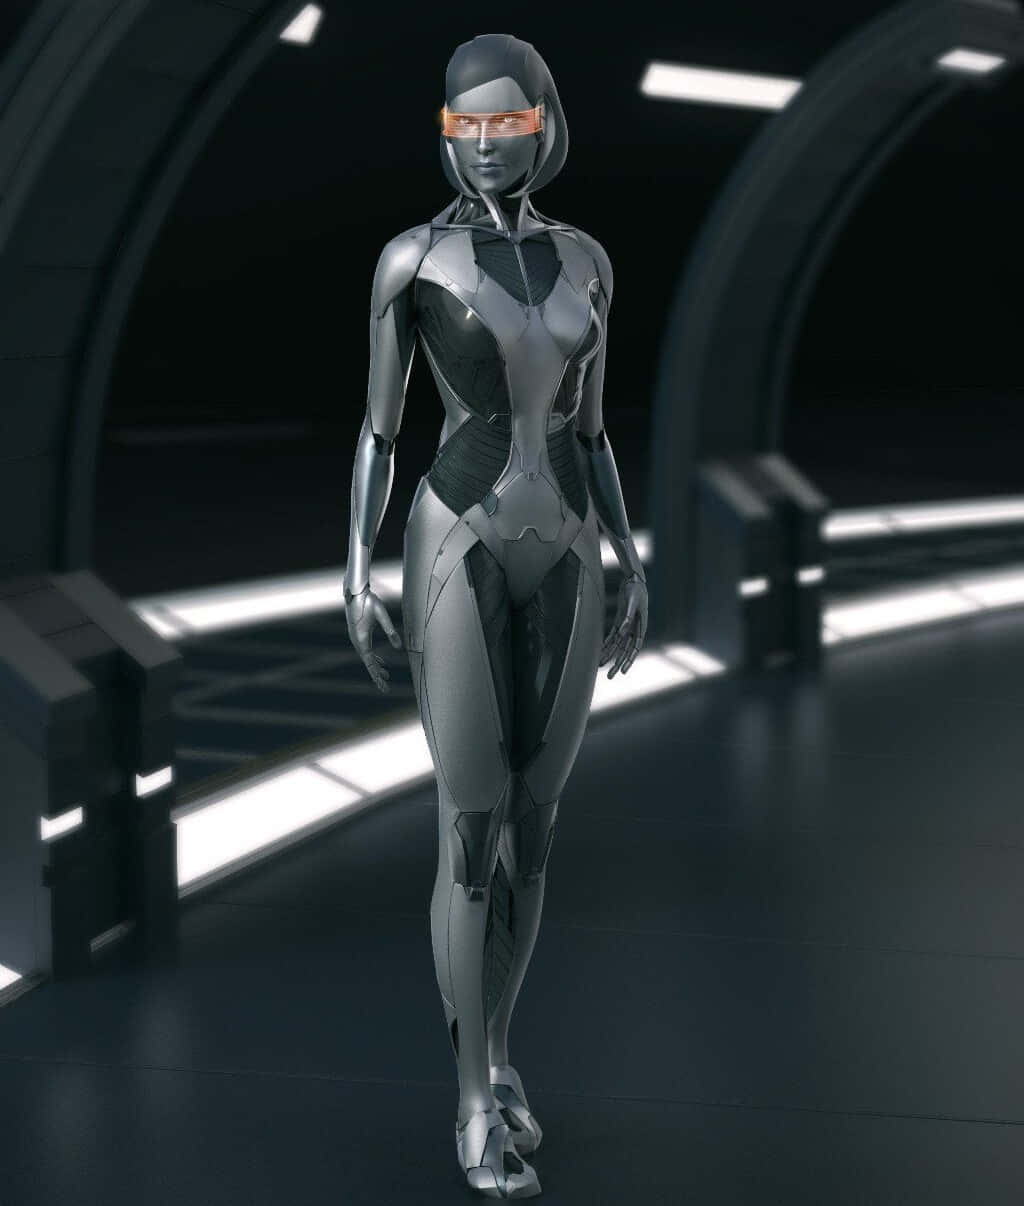 EDI - The Advanced AI of Mass Effect Wallpaper